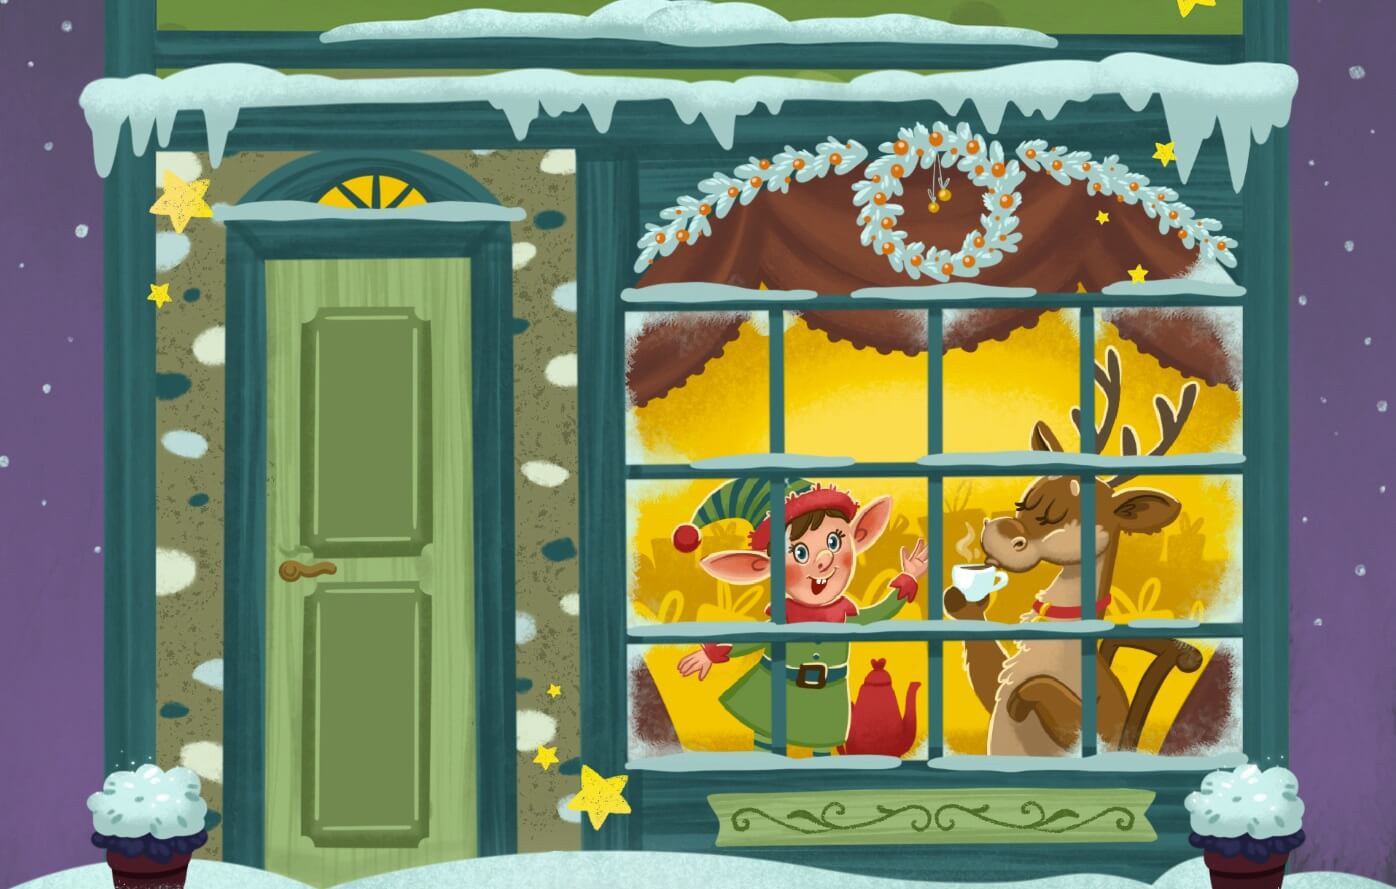 Christmas Illustration Elf & Reindeer at Home by Tina Freshcolor